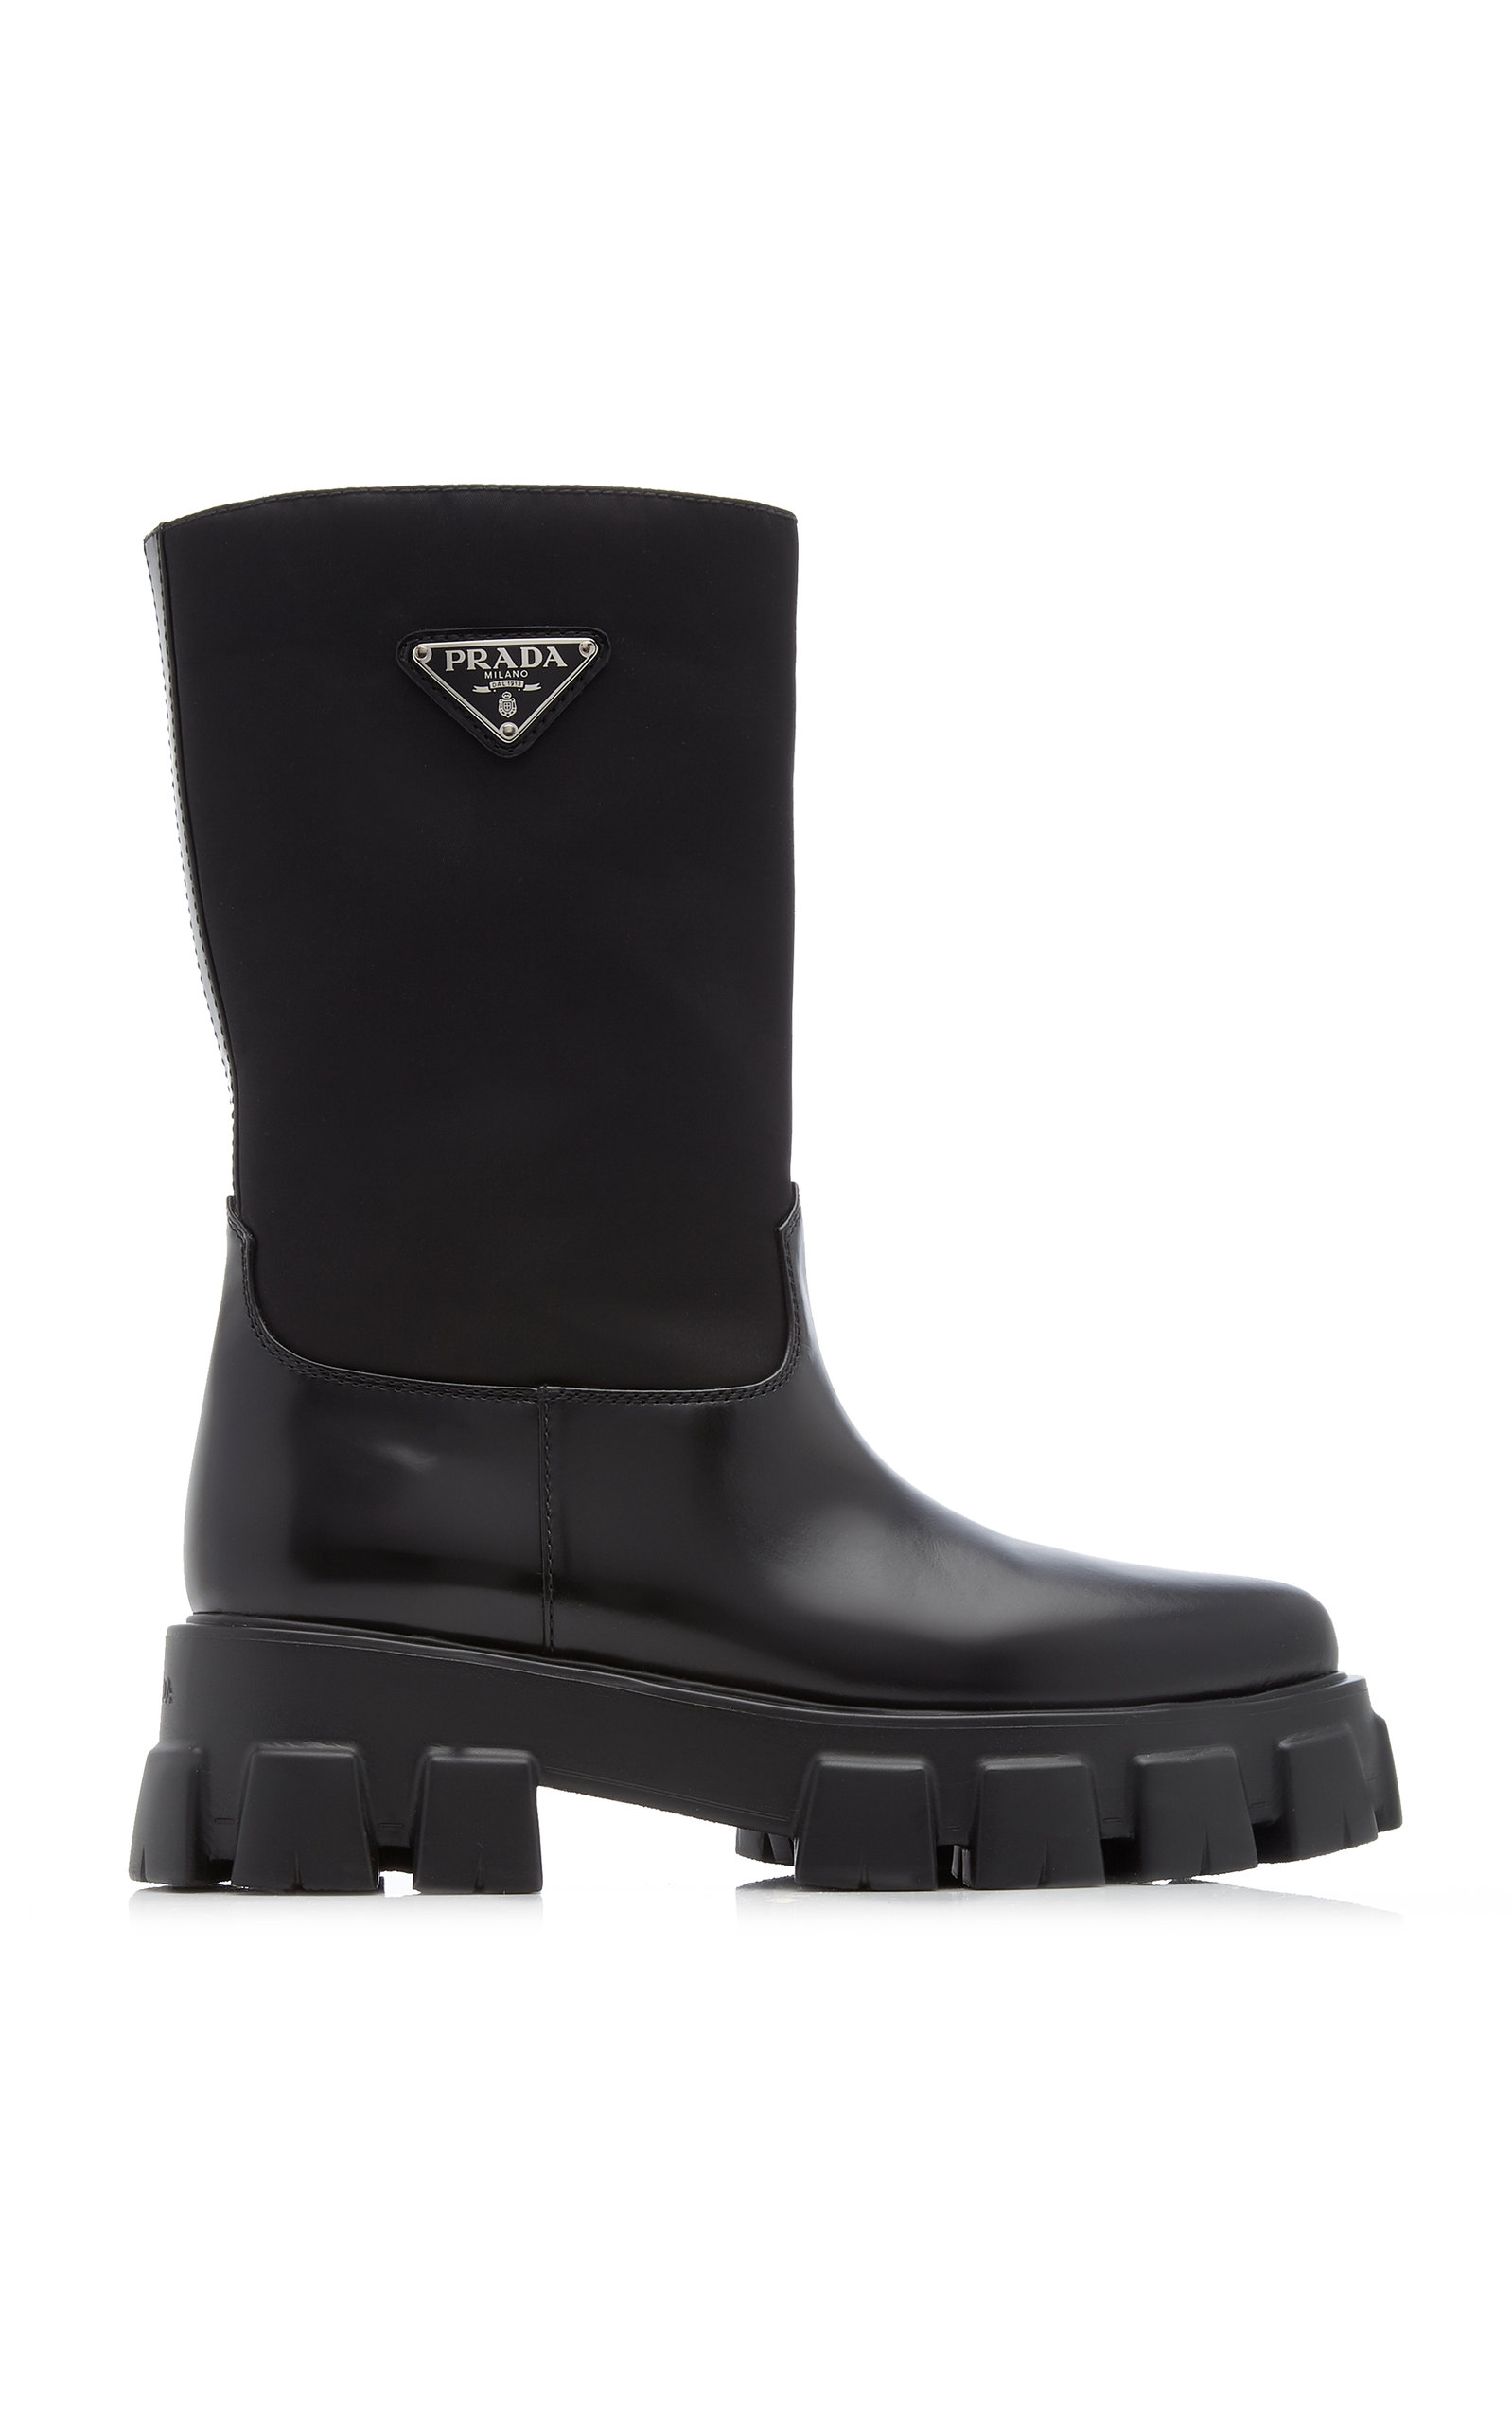 Prada - Women's Leather Boots - Black - IT 39 - Moda Operandi